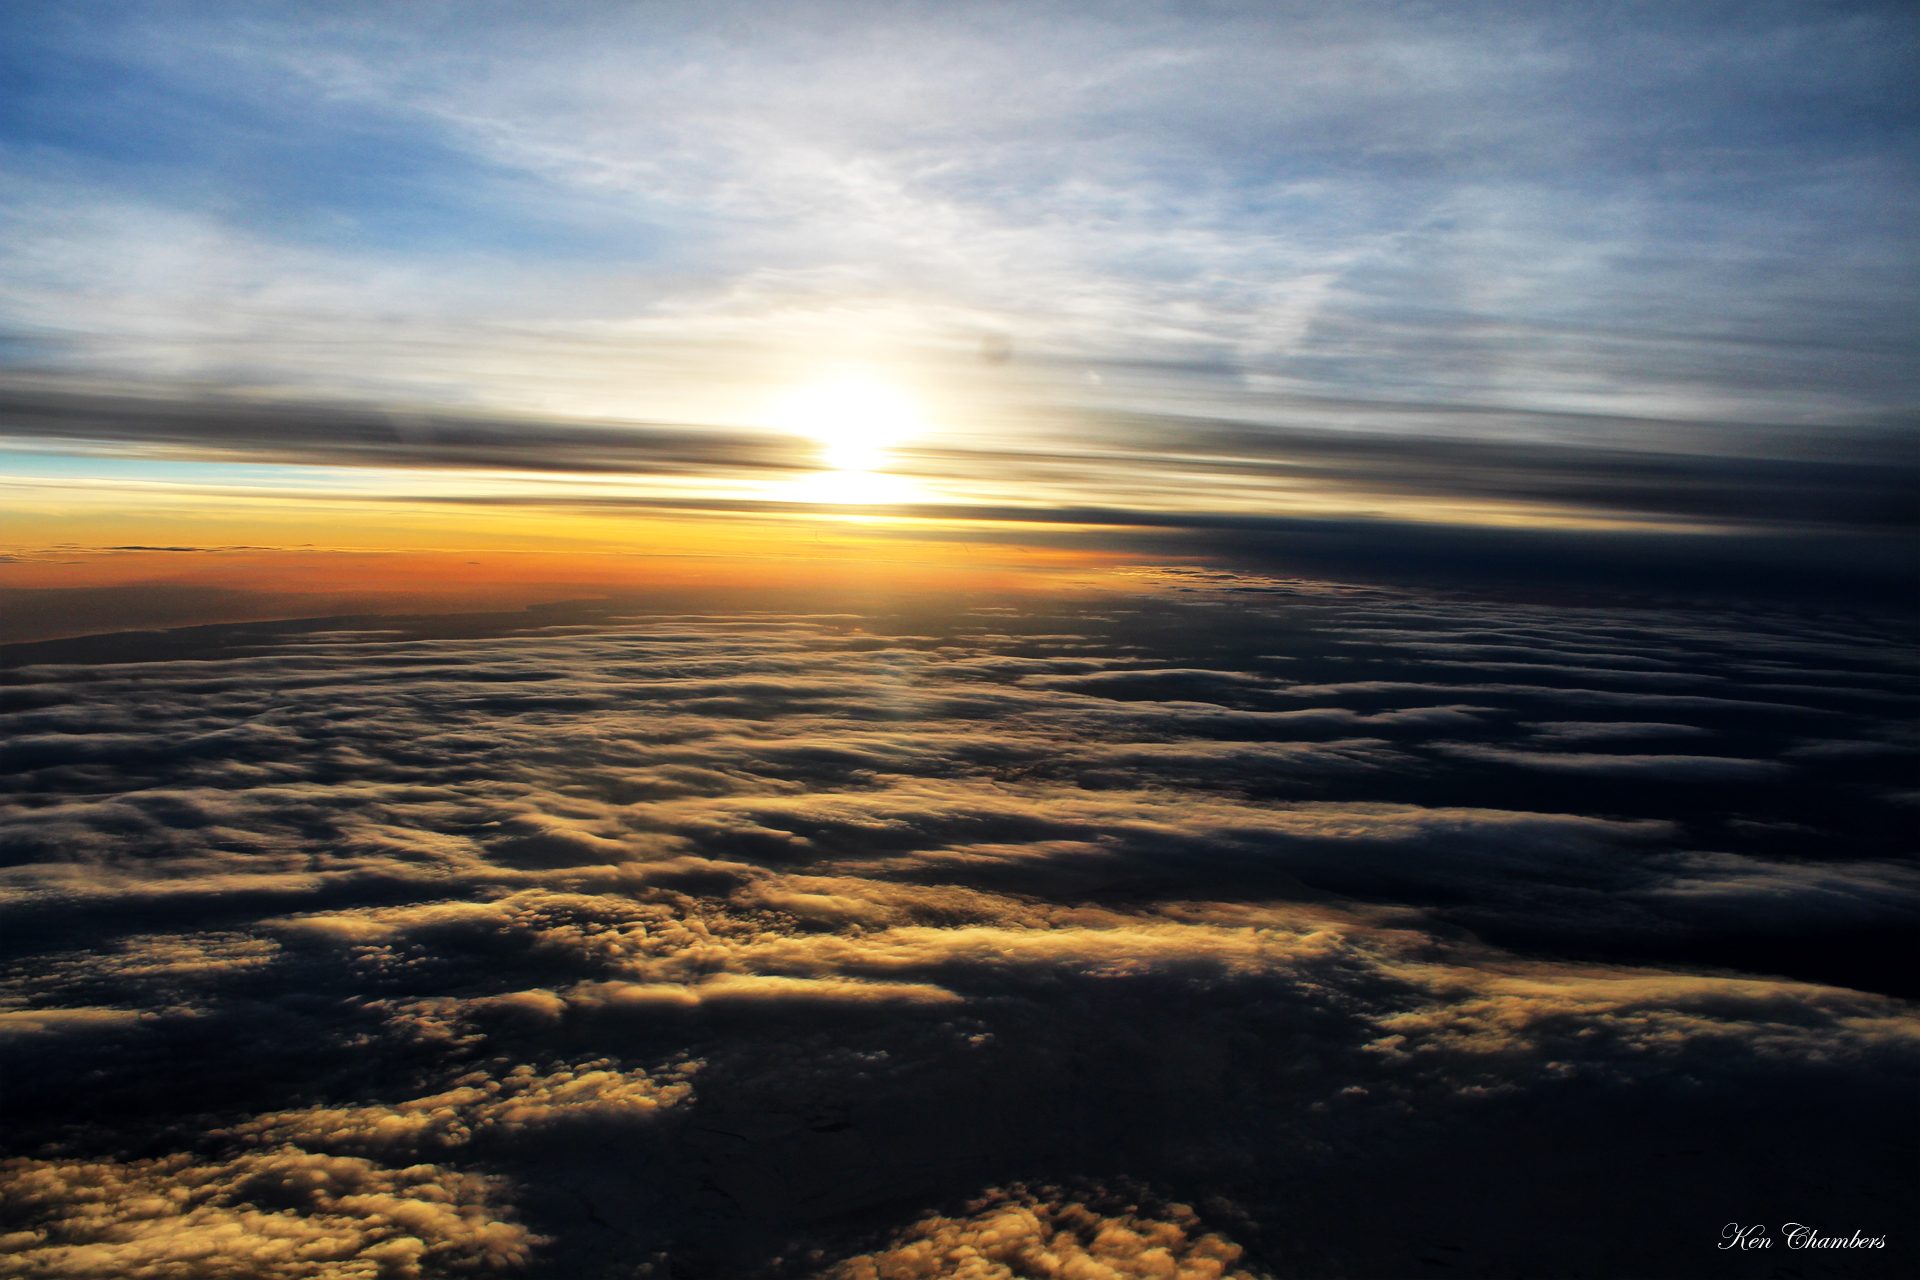 Taken on a plane taking off during sunrise